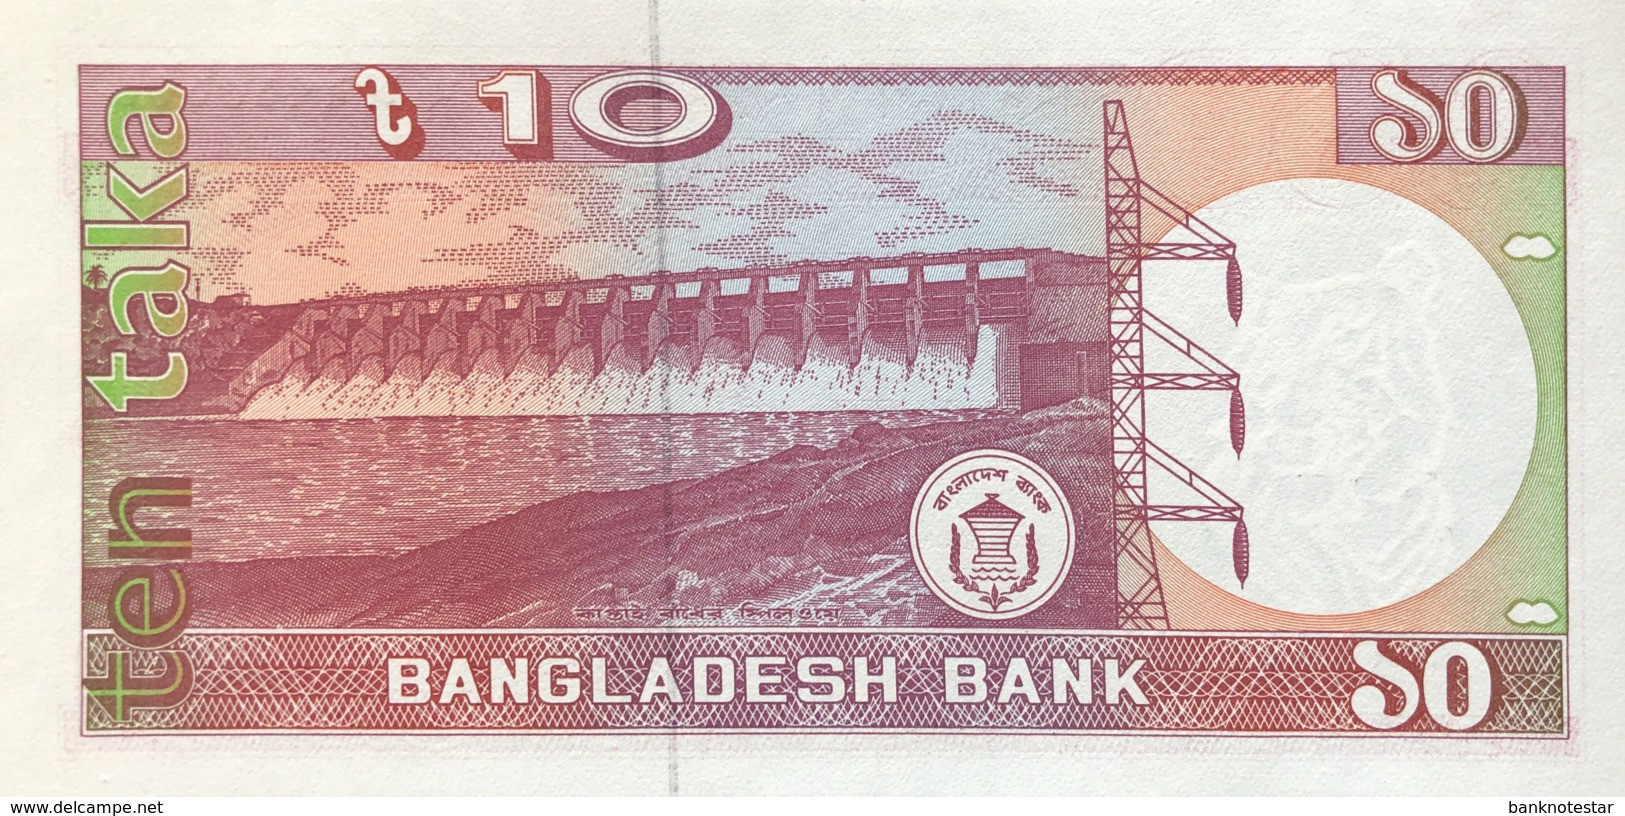 Bangladesh 10 Taka, P-32 (1996) - UNC - Silver Jubilee Banknote - Bangladesh